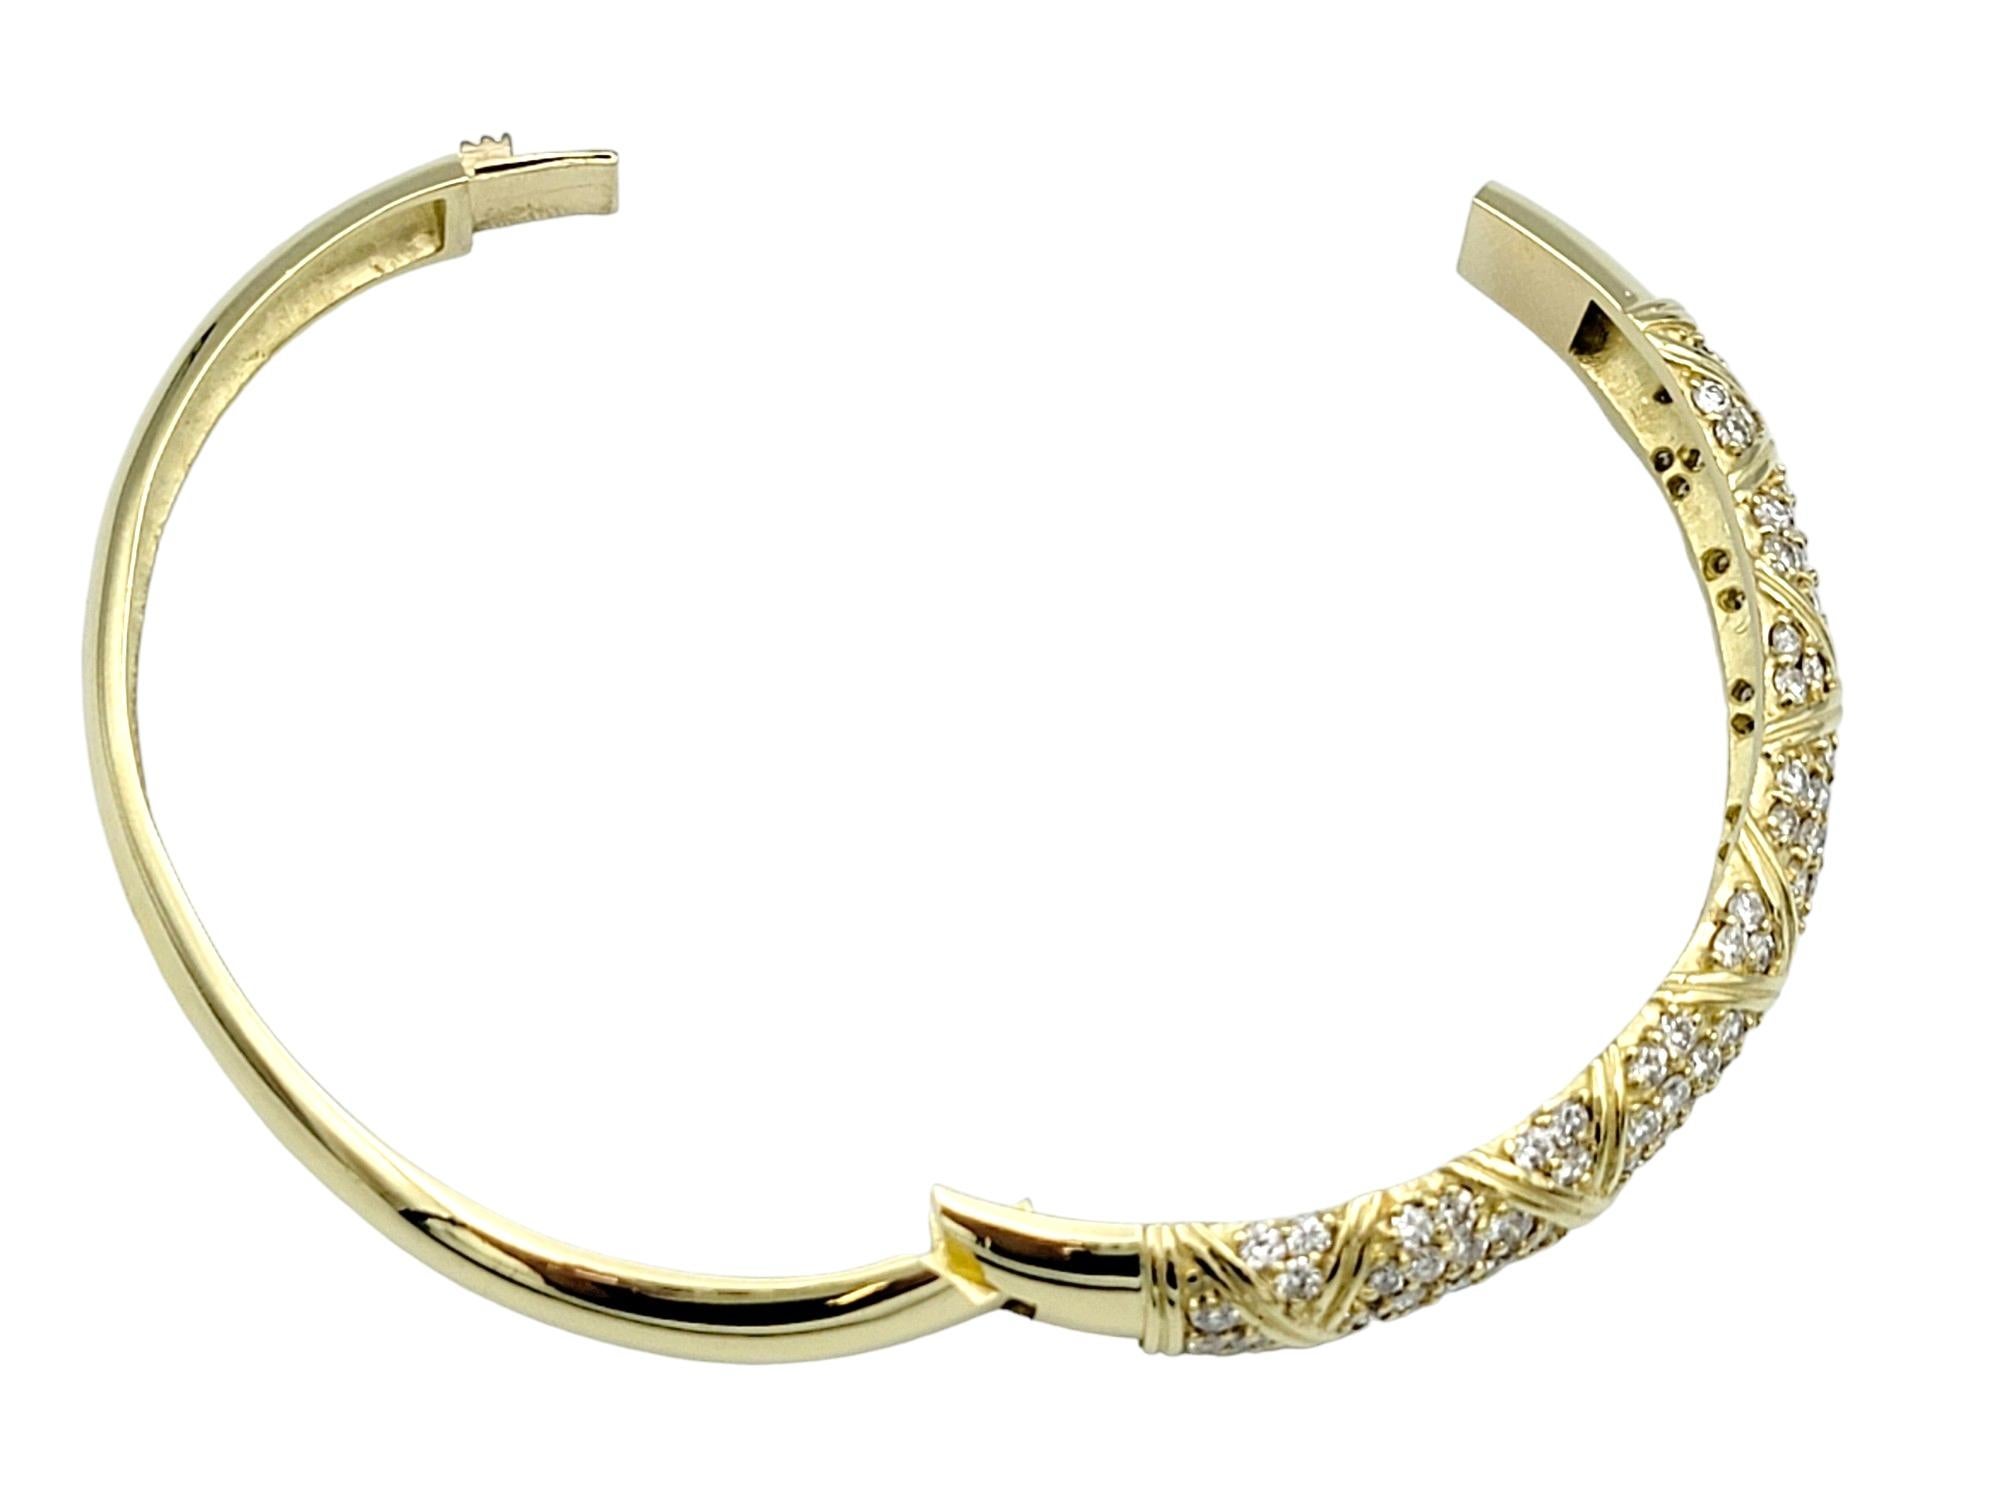 Round Pavé Diamond 'X' Motif Bangle Bracelet in Polished 14 Karat Yellow Gold For Sale 1